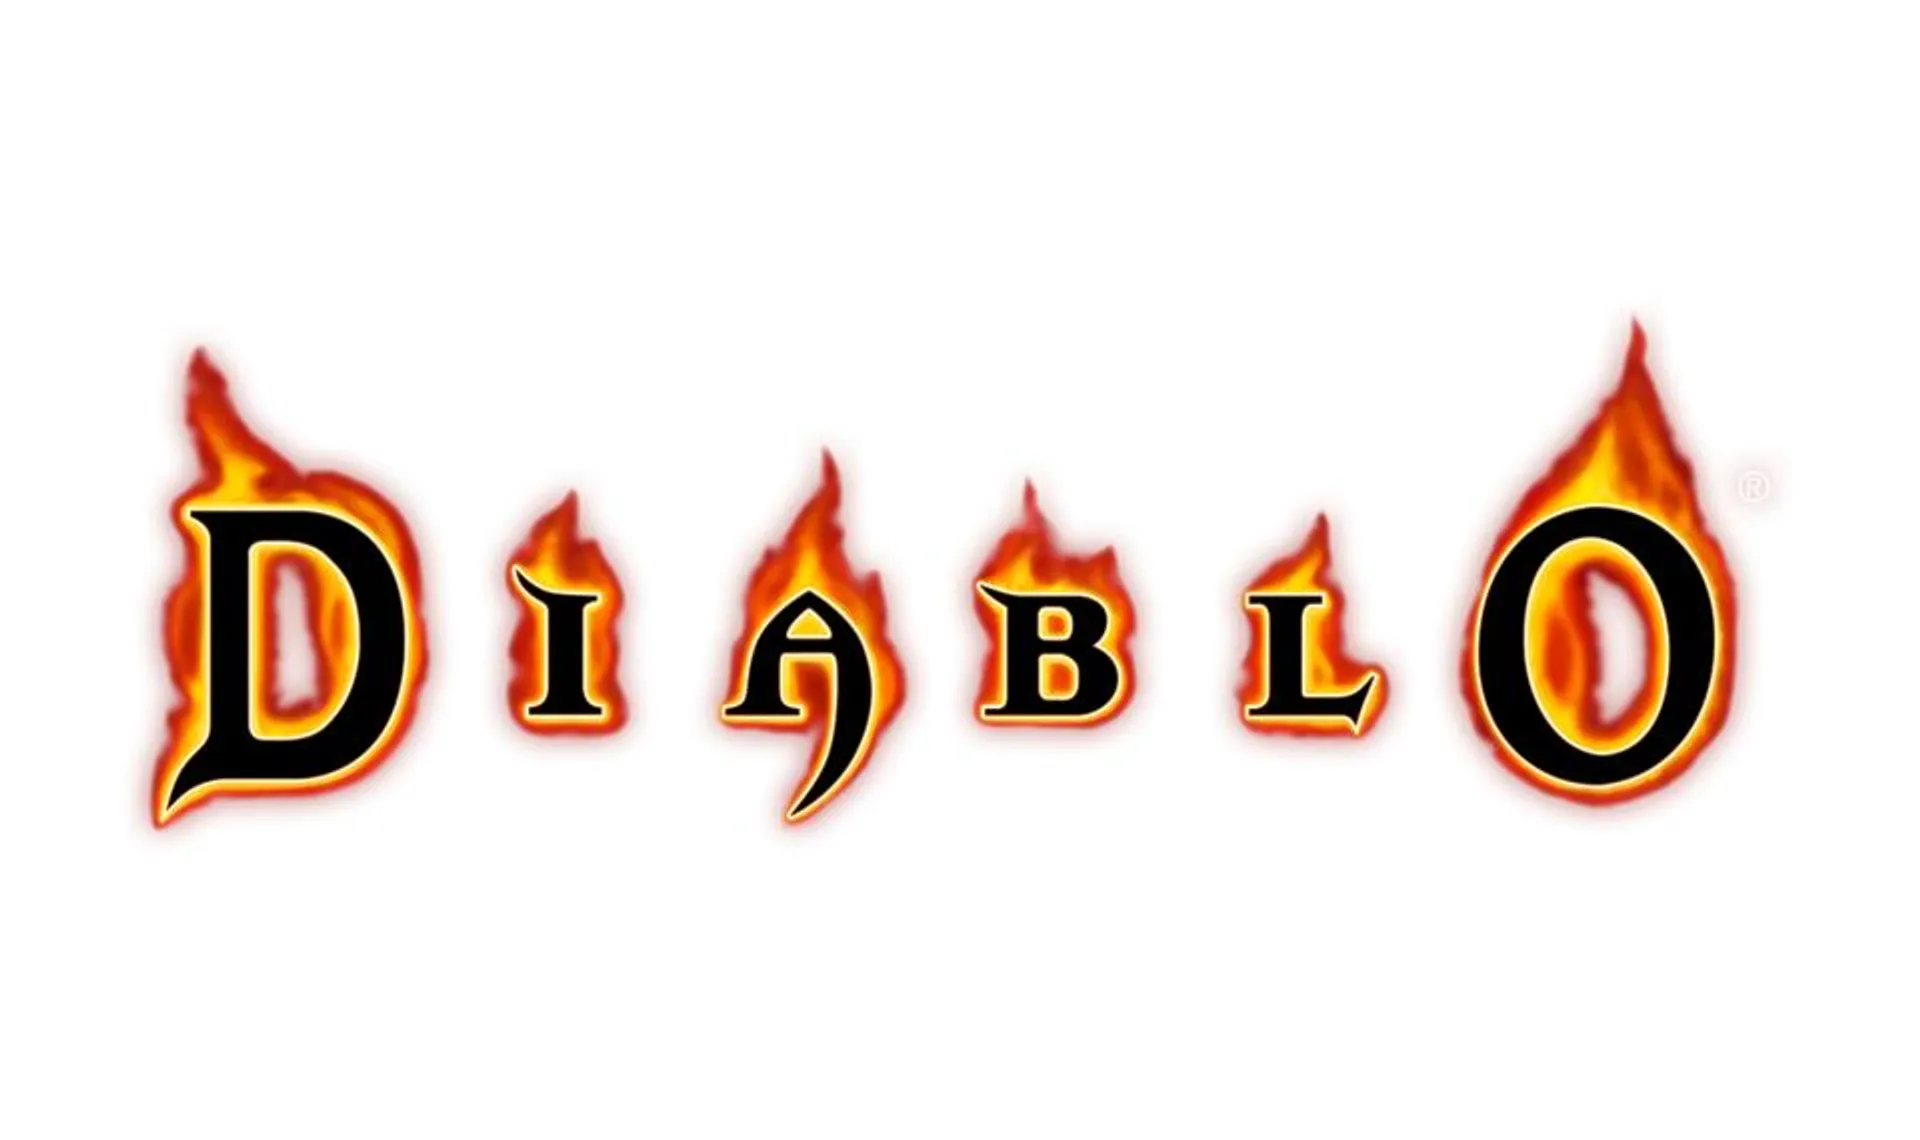 Diablo + Hellfire